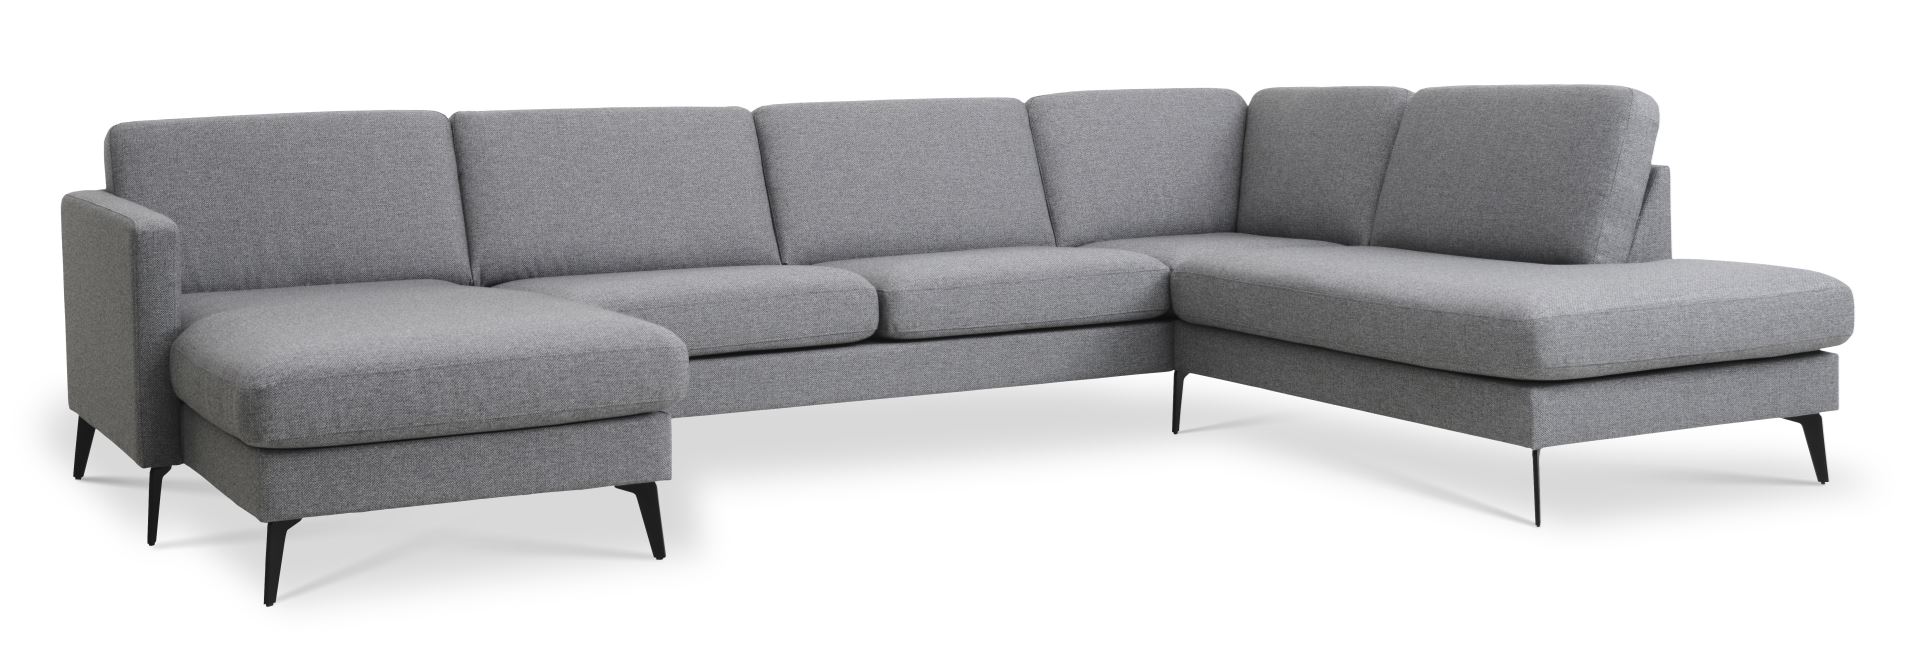 Ask sæt 55 U OE sofa, m. højre chaiselong - lys granitgrå polyester stof og Eiffel ben